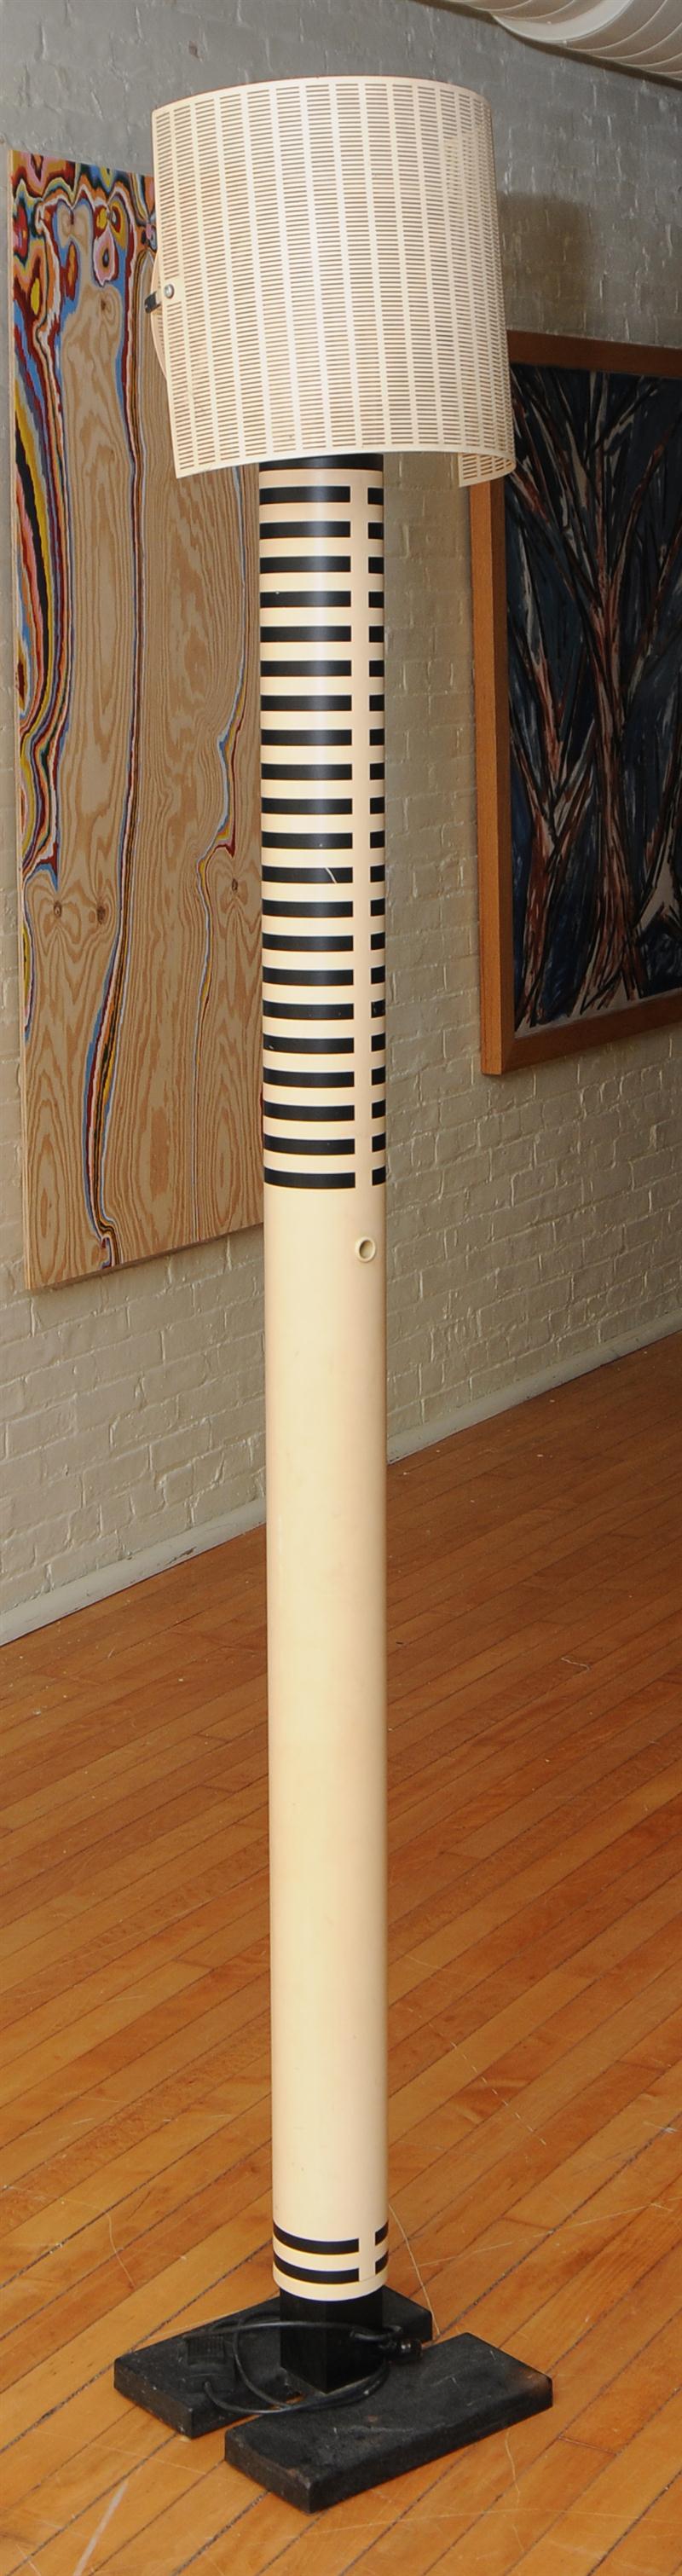 SHOGUN FLOOR LAMP DESIGNED BY MARIO 13c198